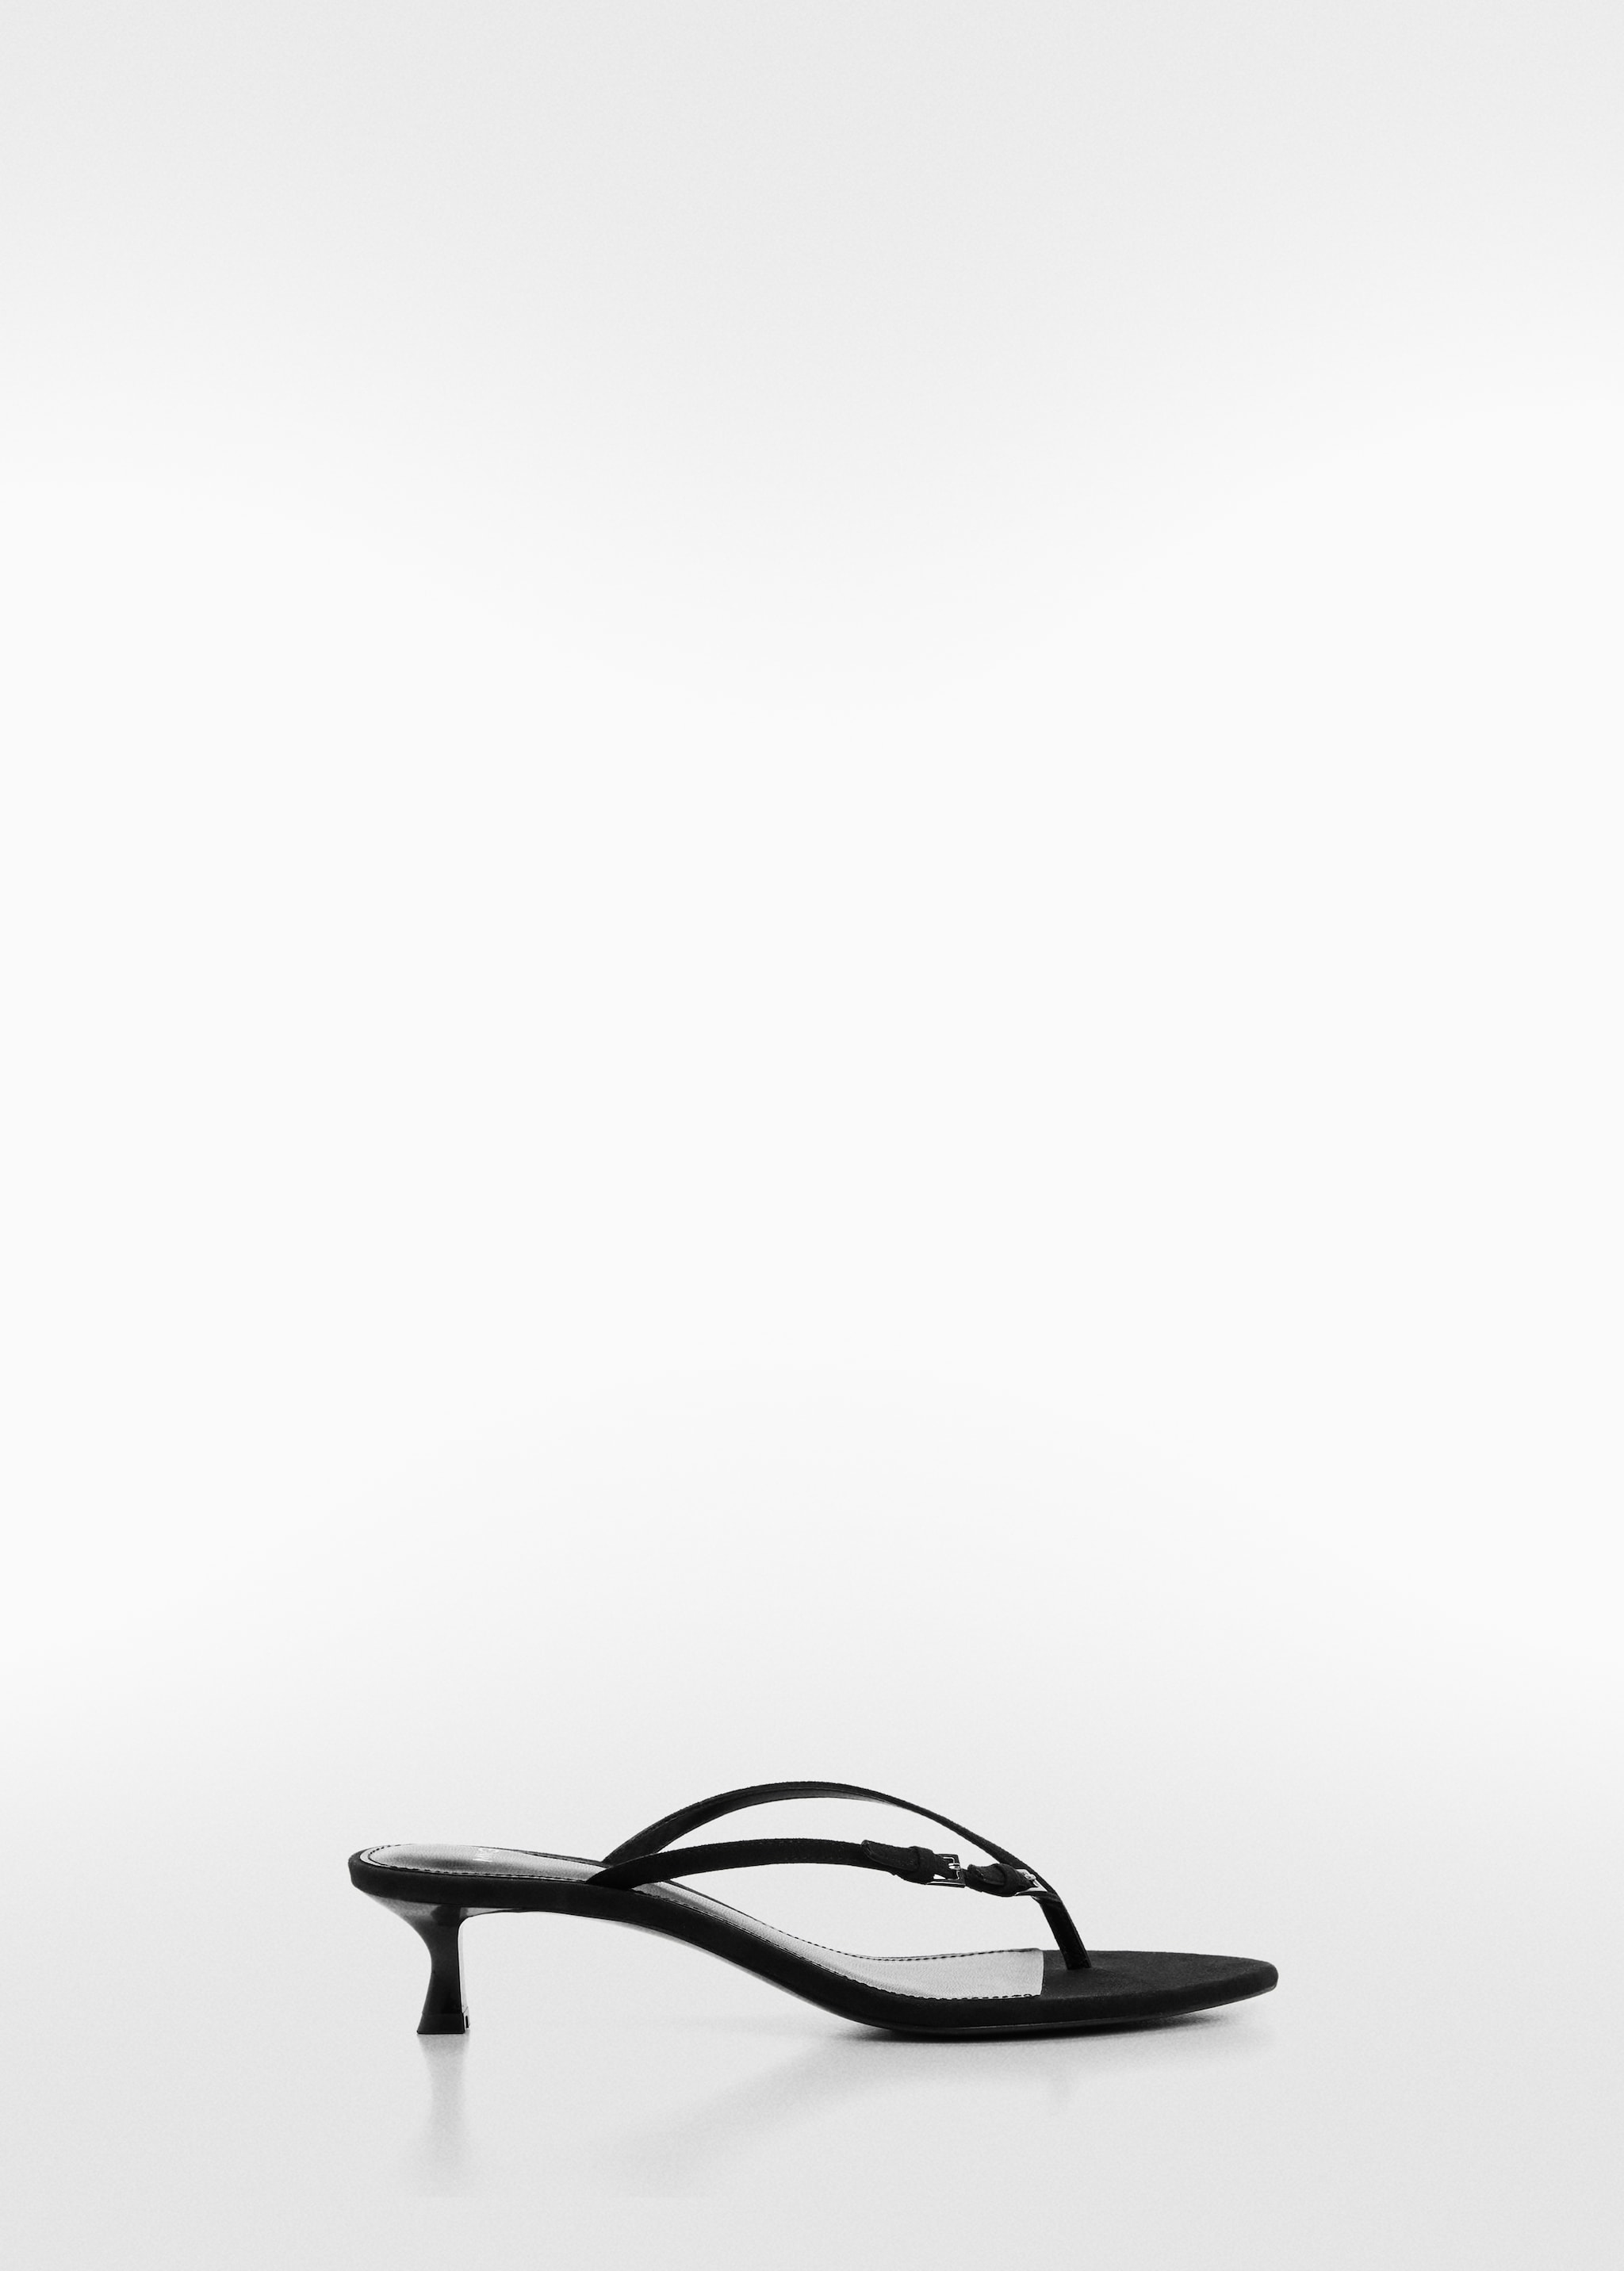 Heeled sandal with buckle detail - Изделие без модели